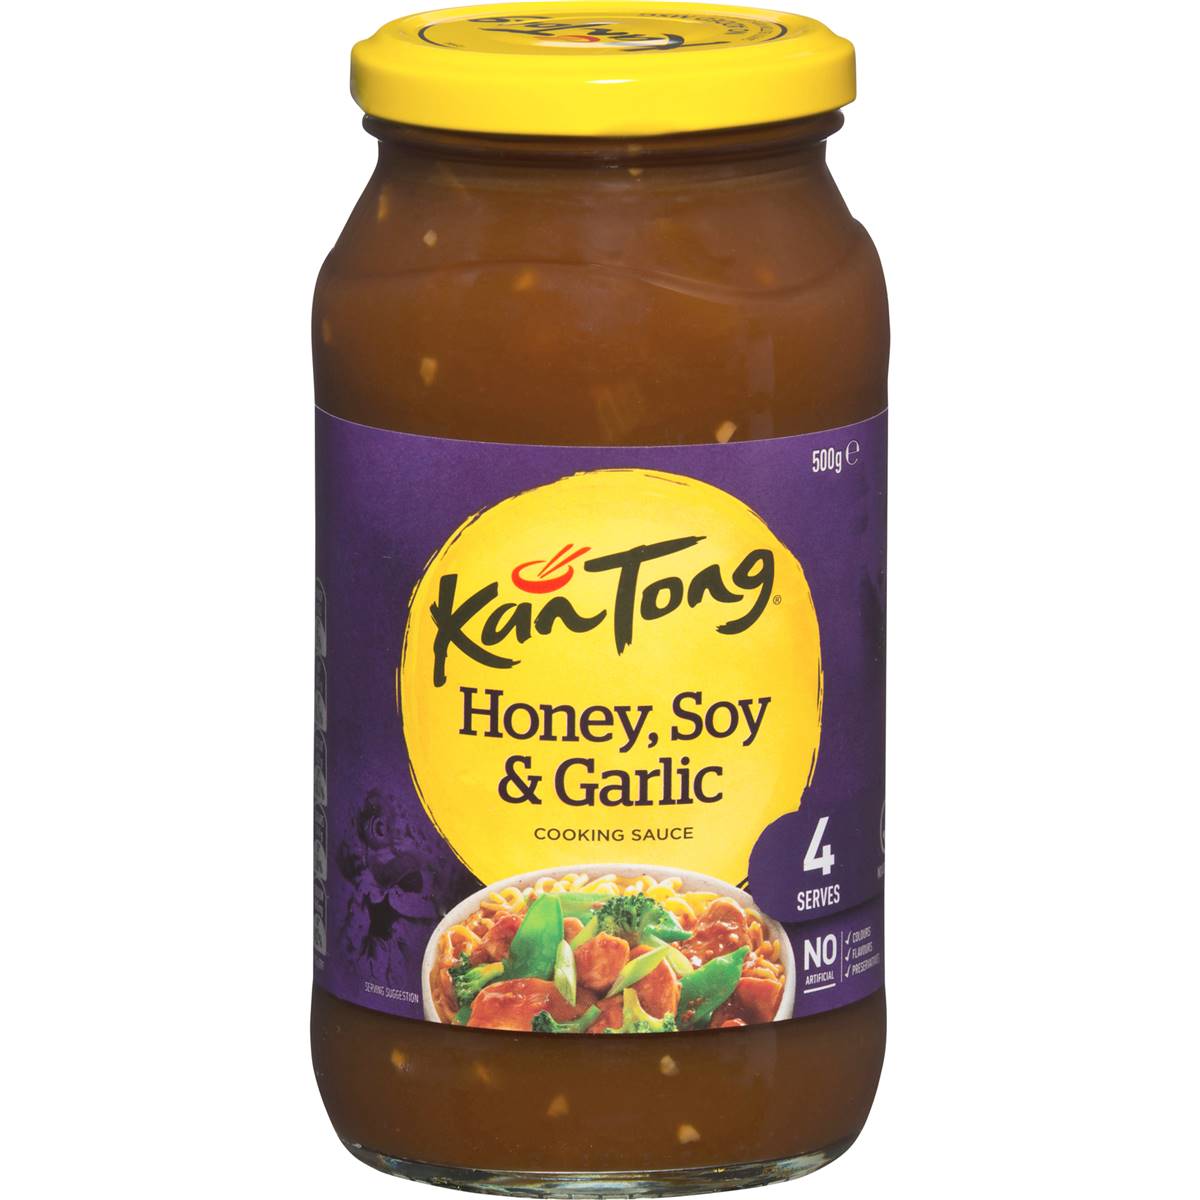 KanTong Cooking Sauce Honey Soy Garlic 500g